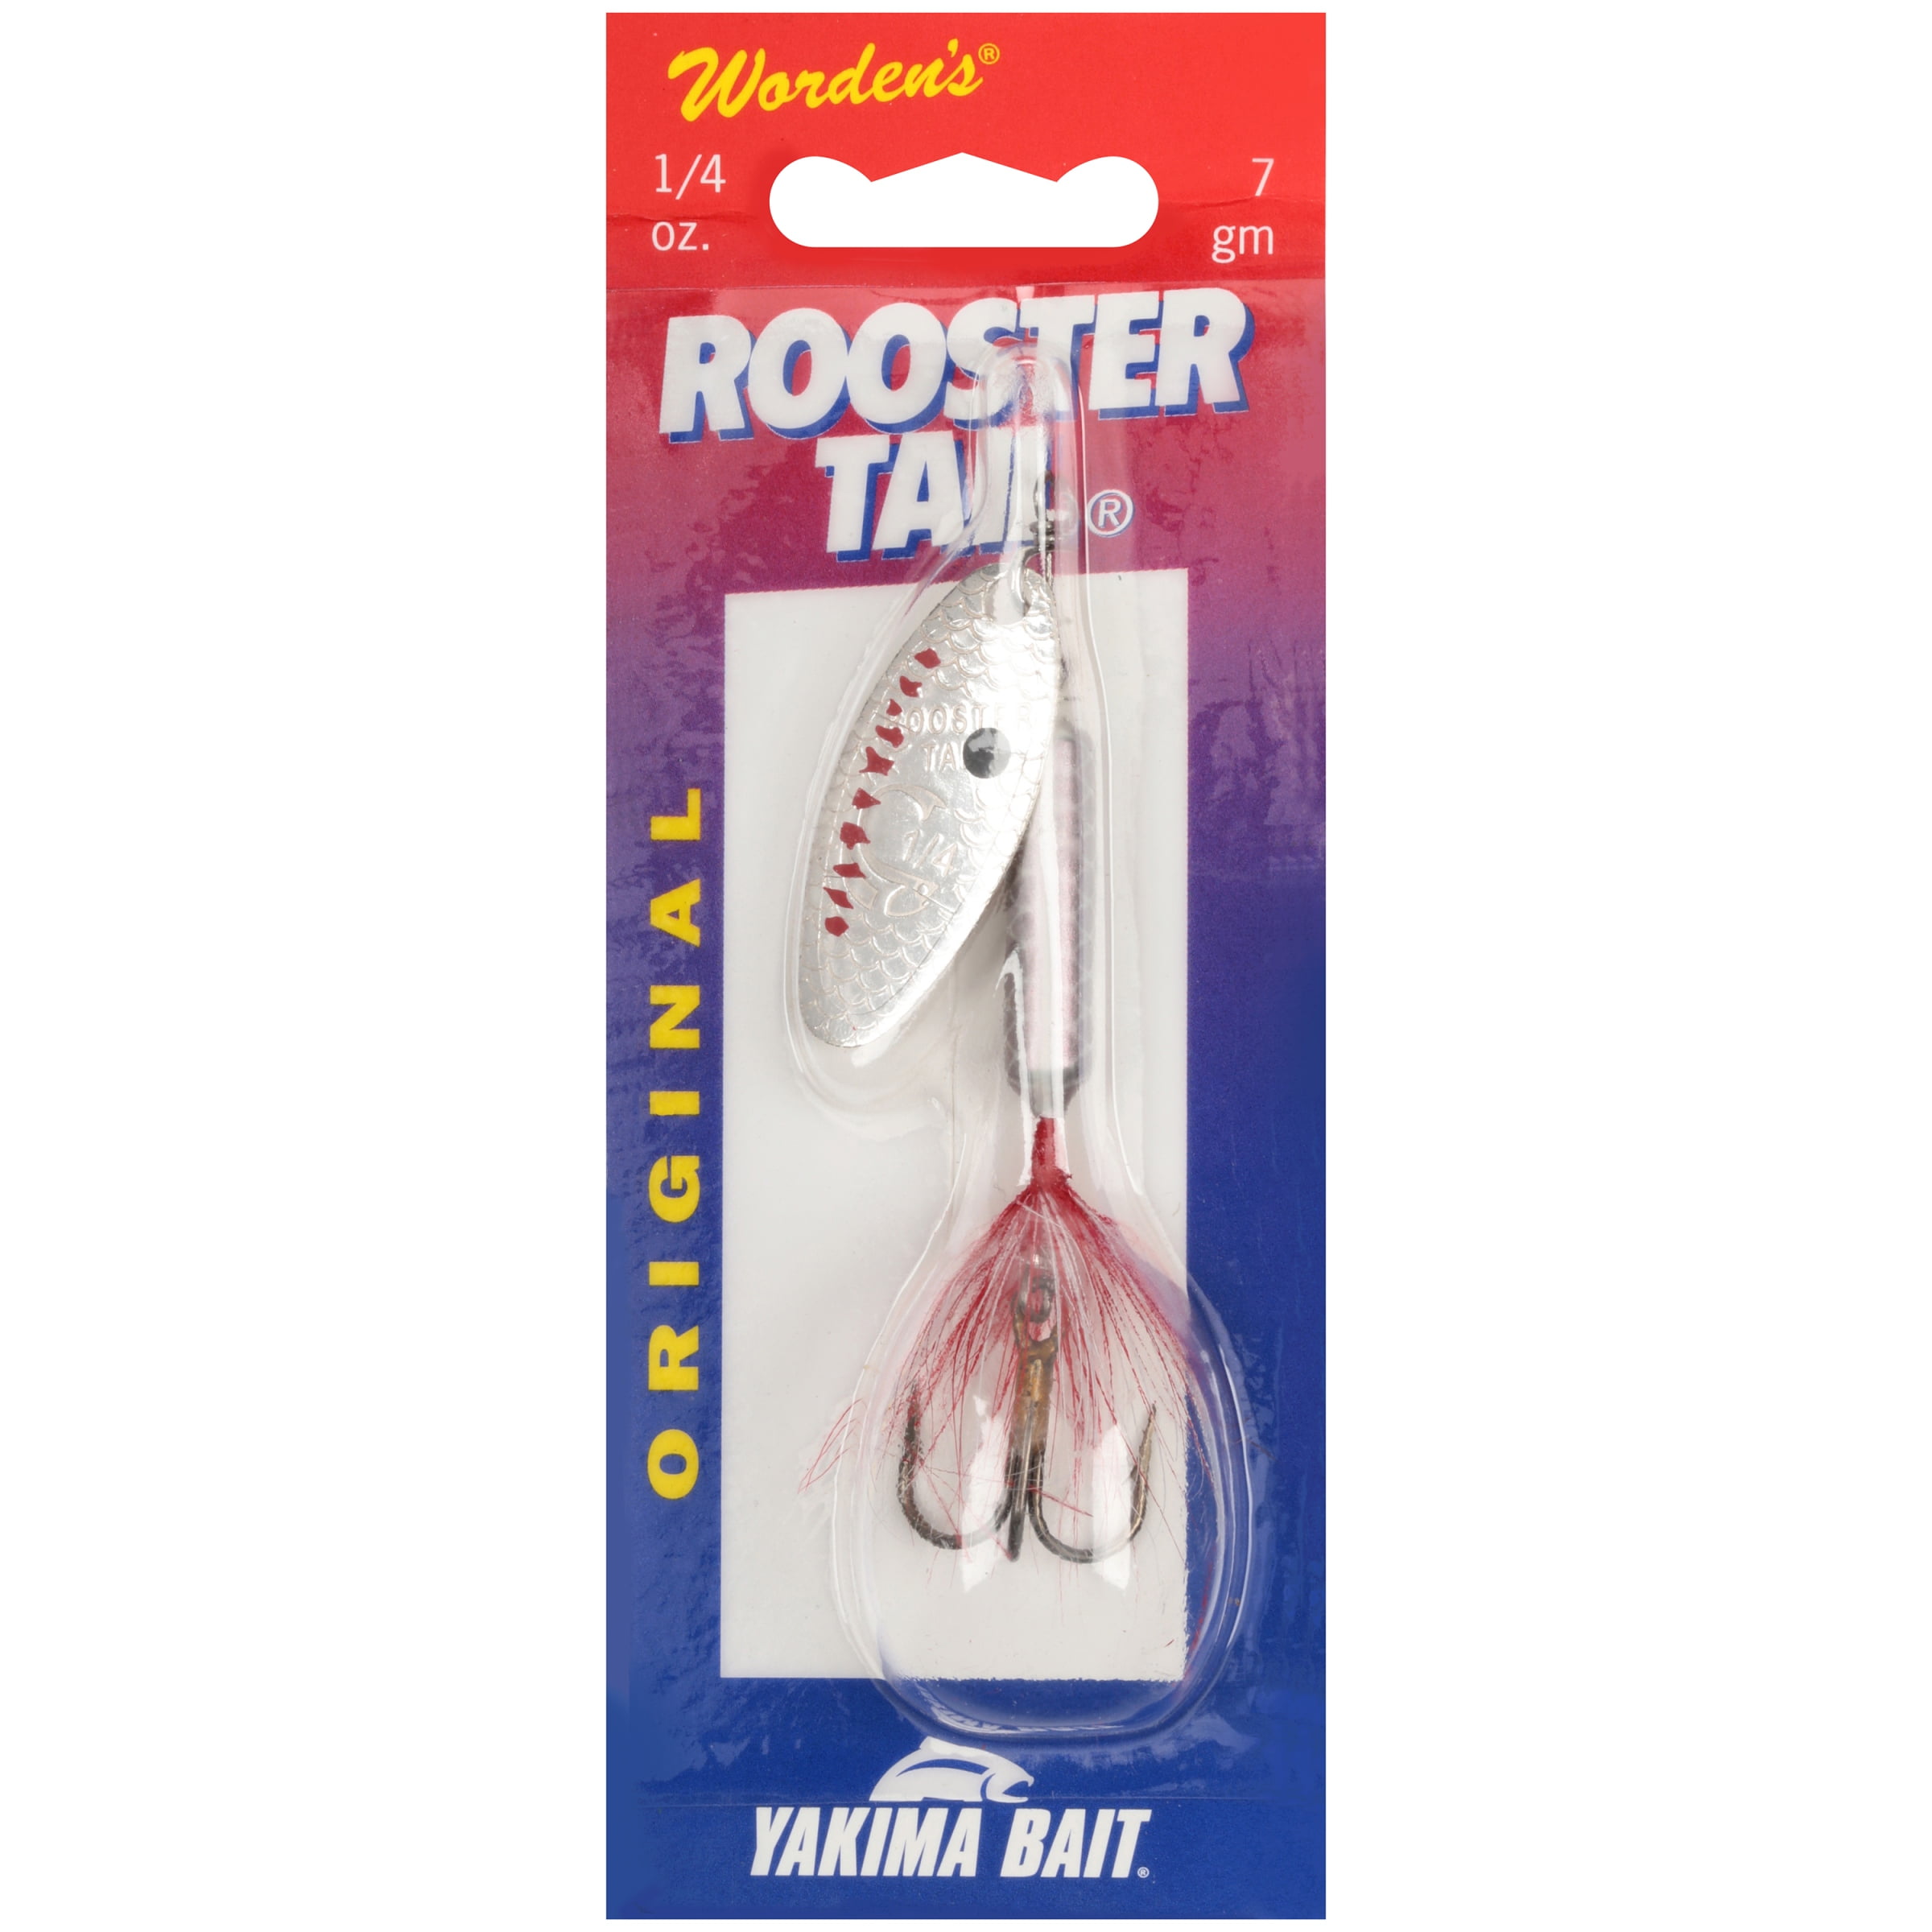 Wordens 1/4 oz Pink Original Rooster Tail Fishing Lure Crainkbait 